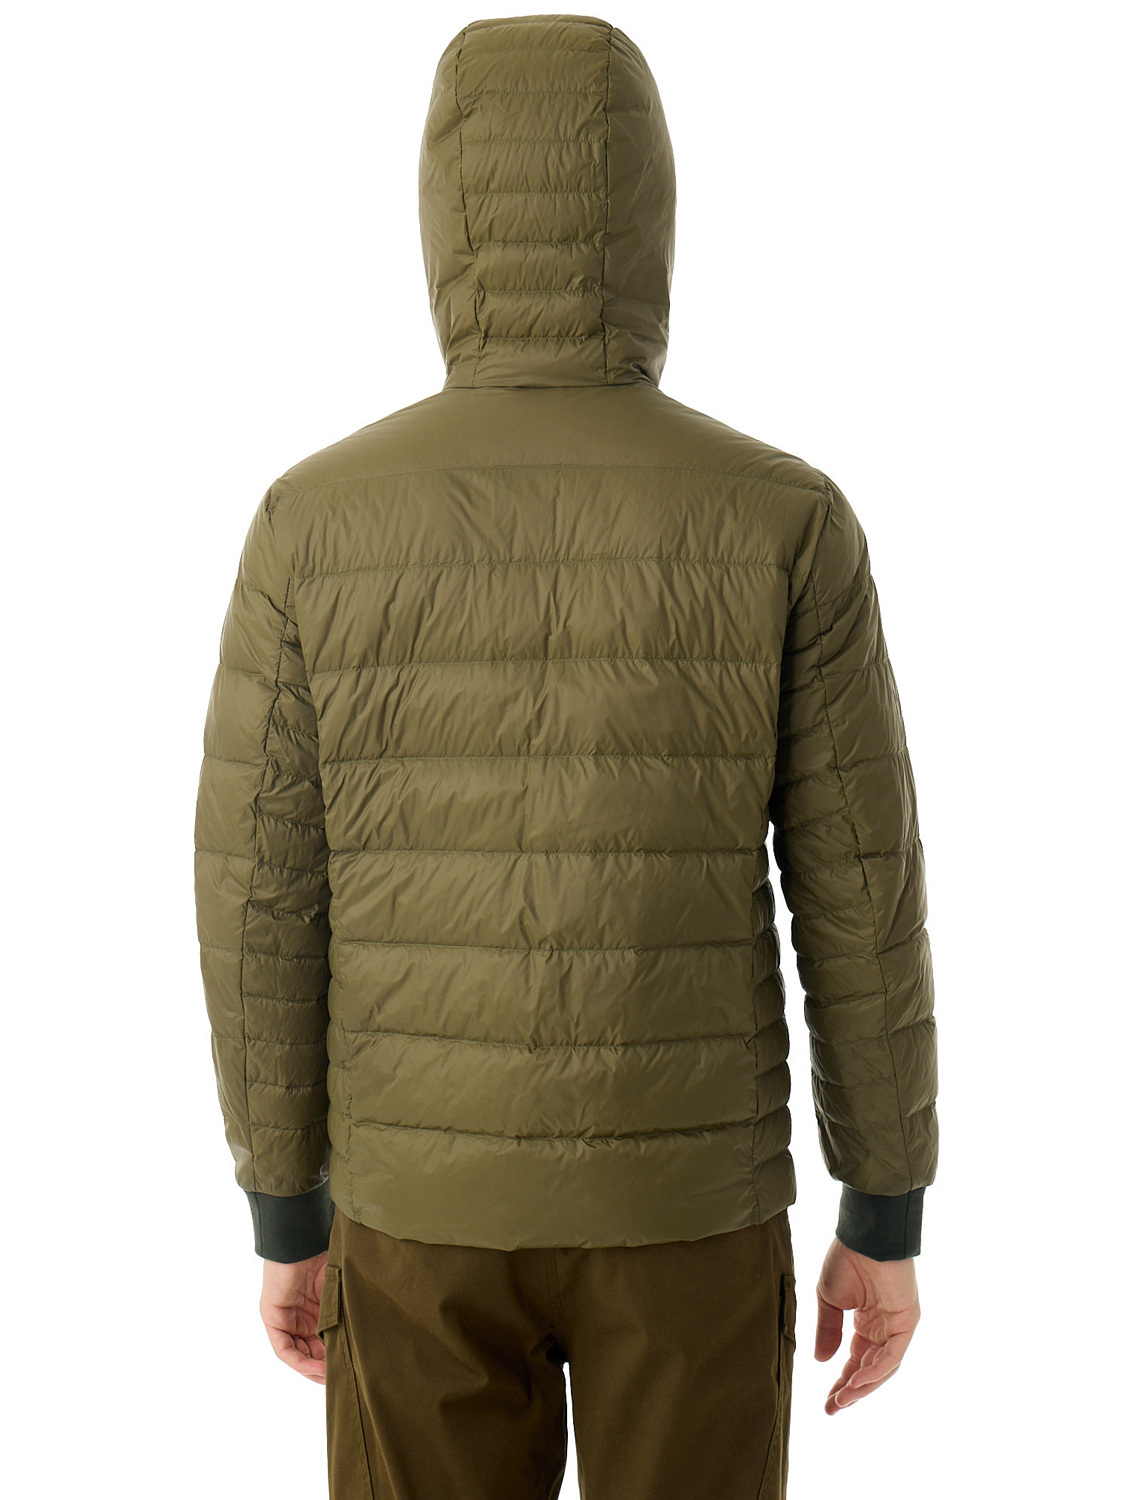 Куртка Dolomite Hood Jacket M's Corvara Light Burnished Green